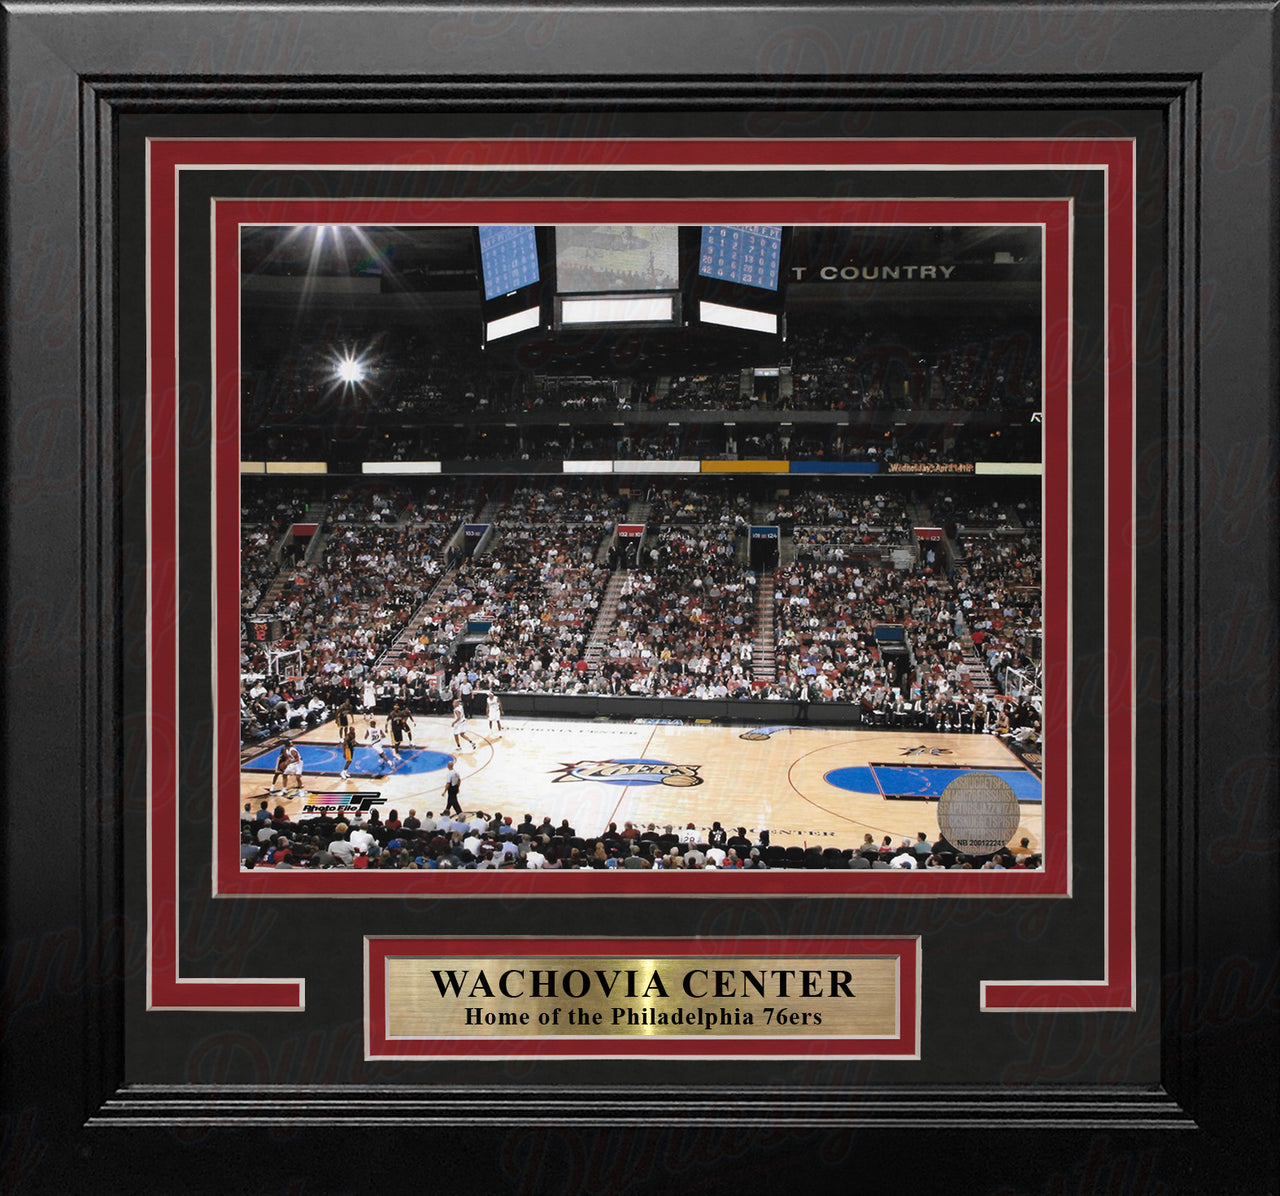 Philadelphia 76ers Wachovia Center 8" x 10" Framed Basketball Arena Photo - Dynasty Sports & Framing 